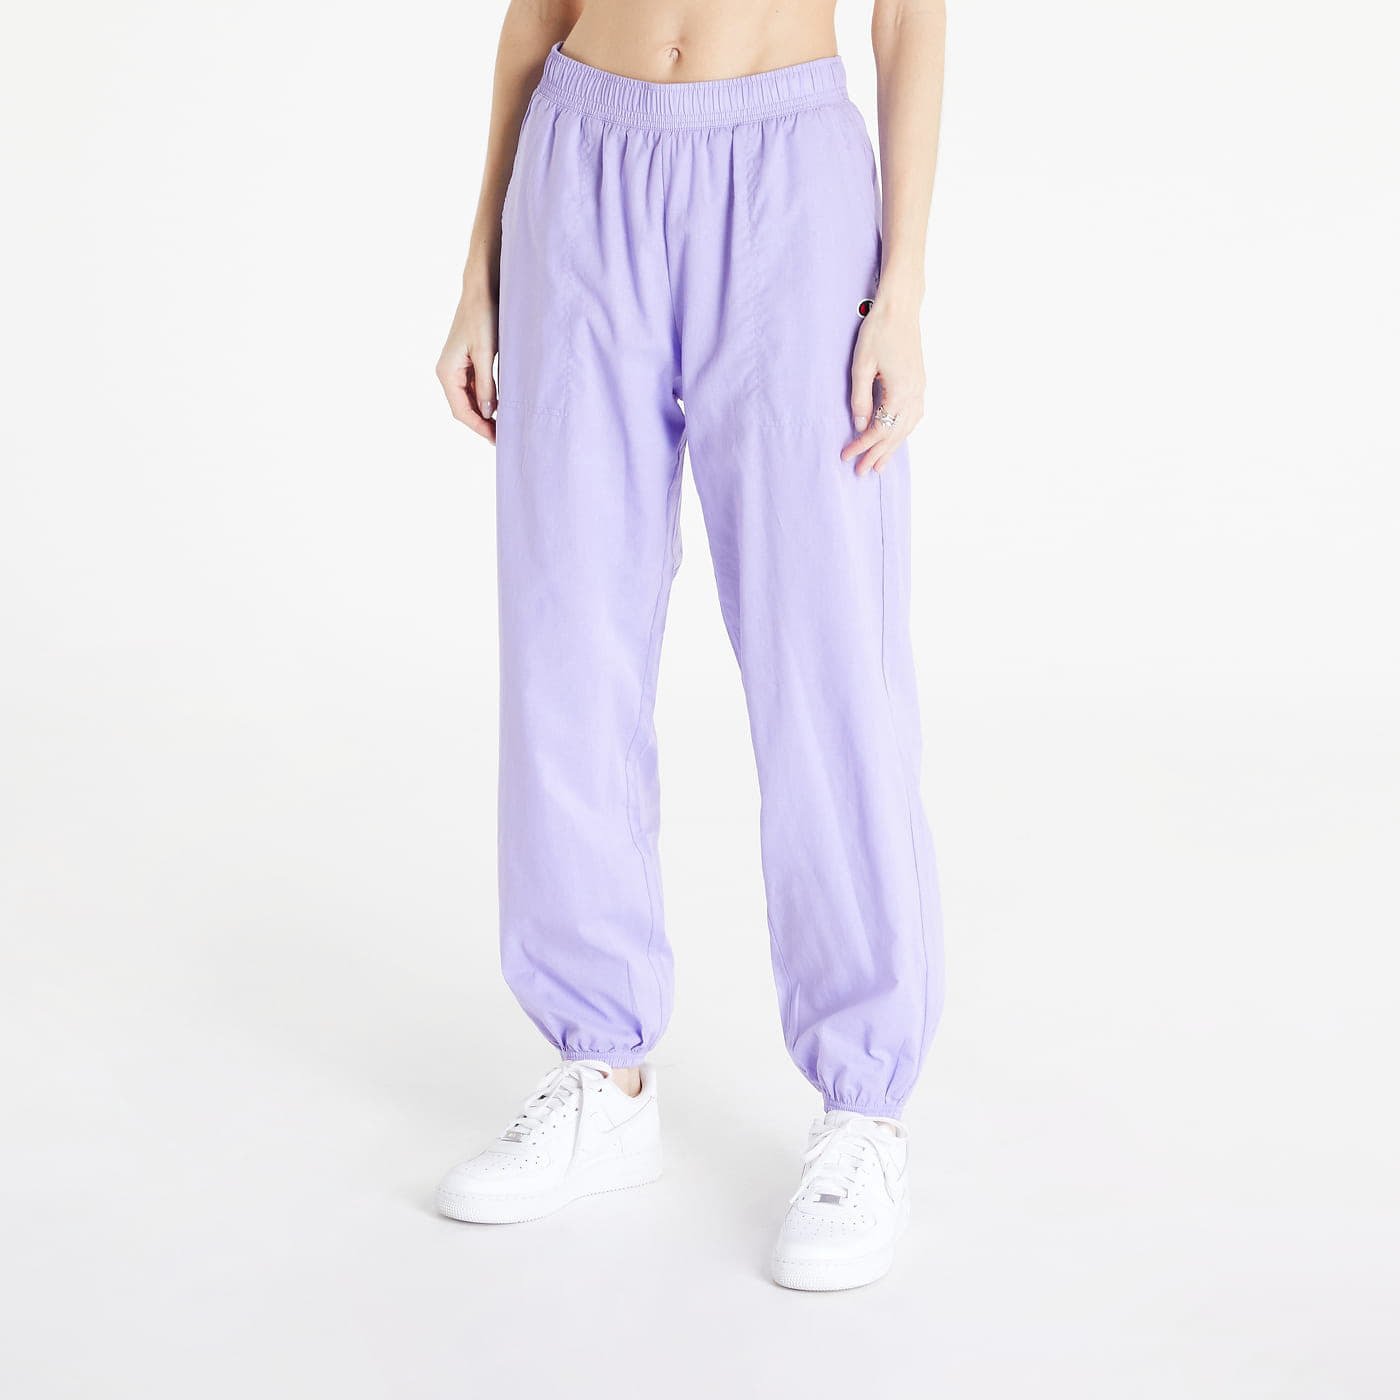 Champion - elastic cuff pants purple